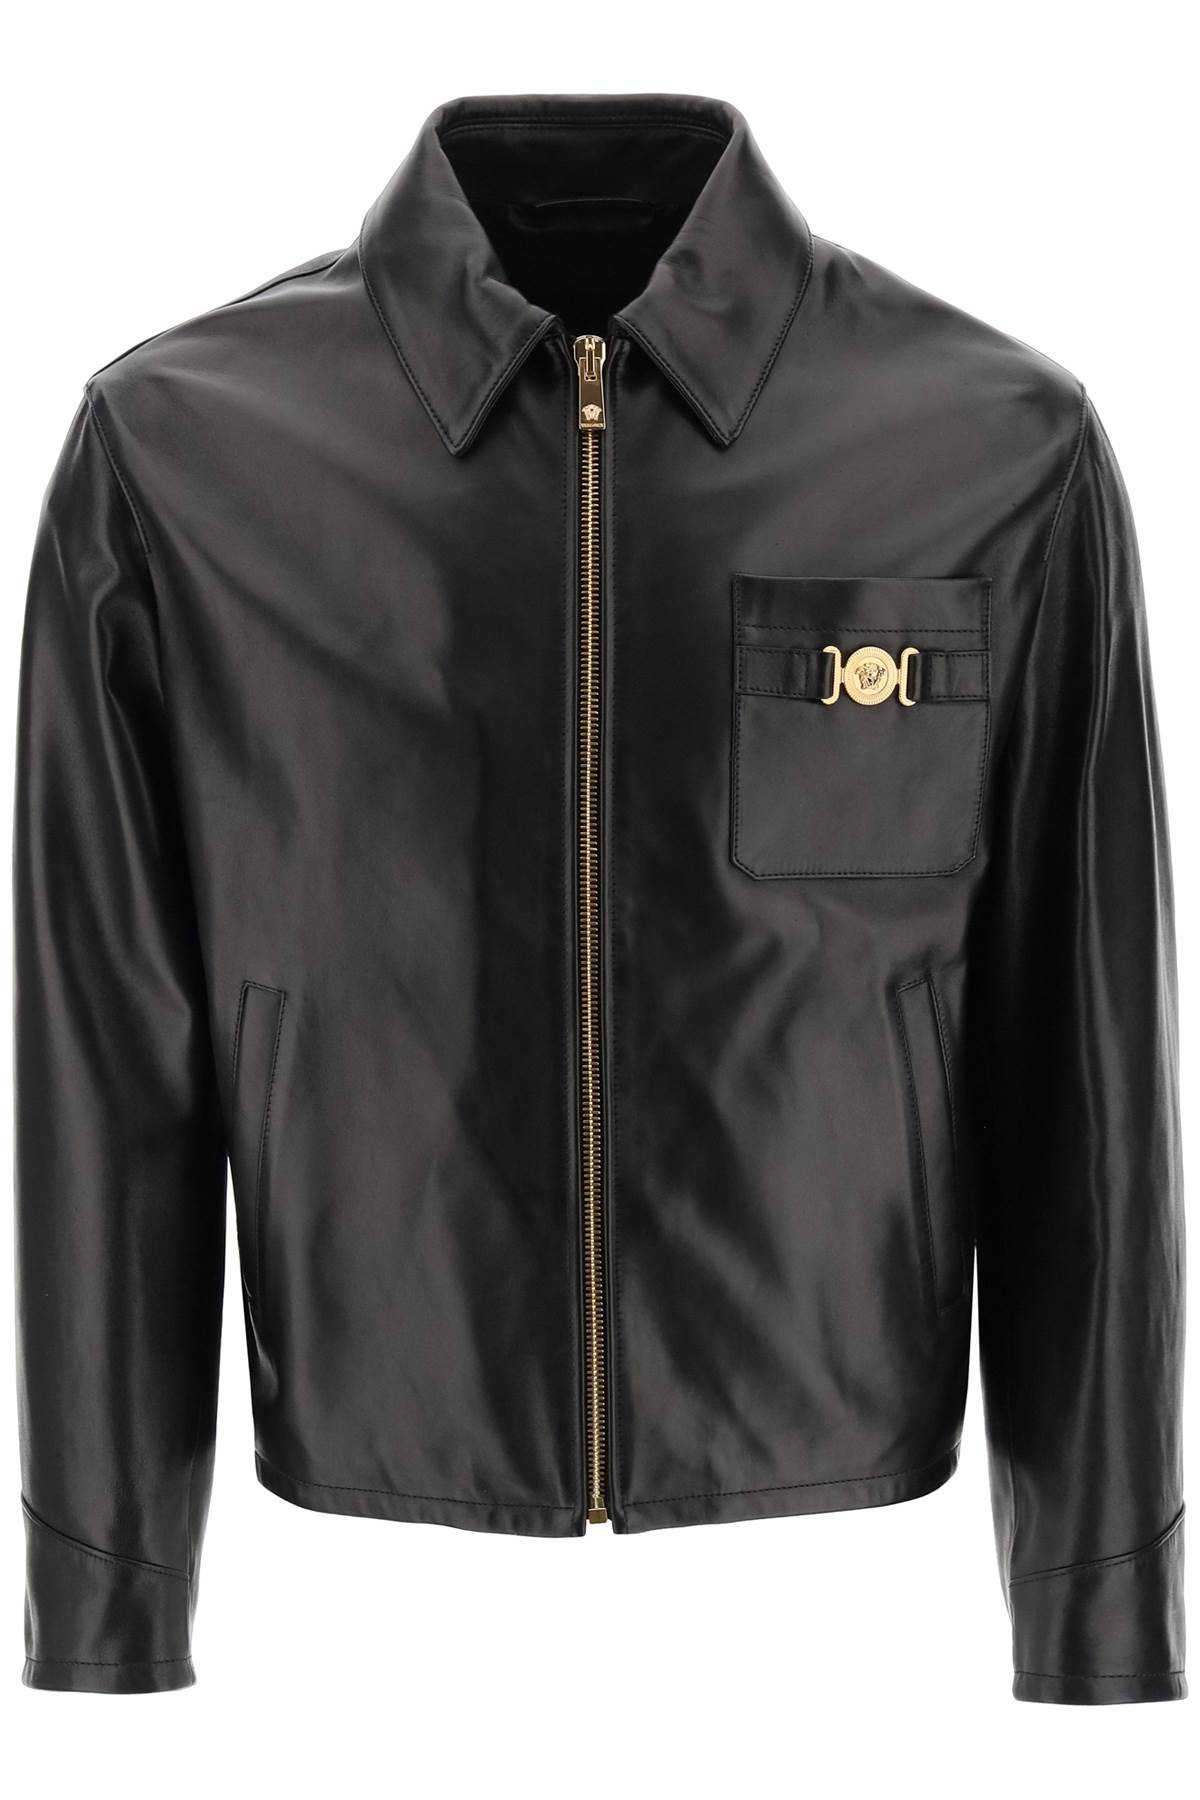 Versace leather blouse jacket-0